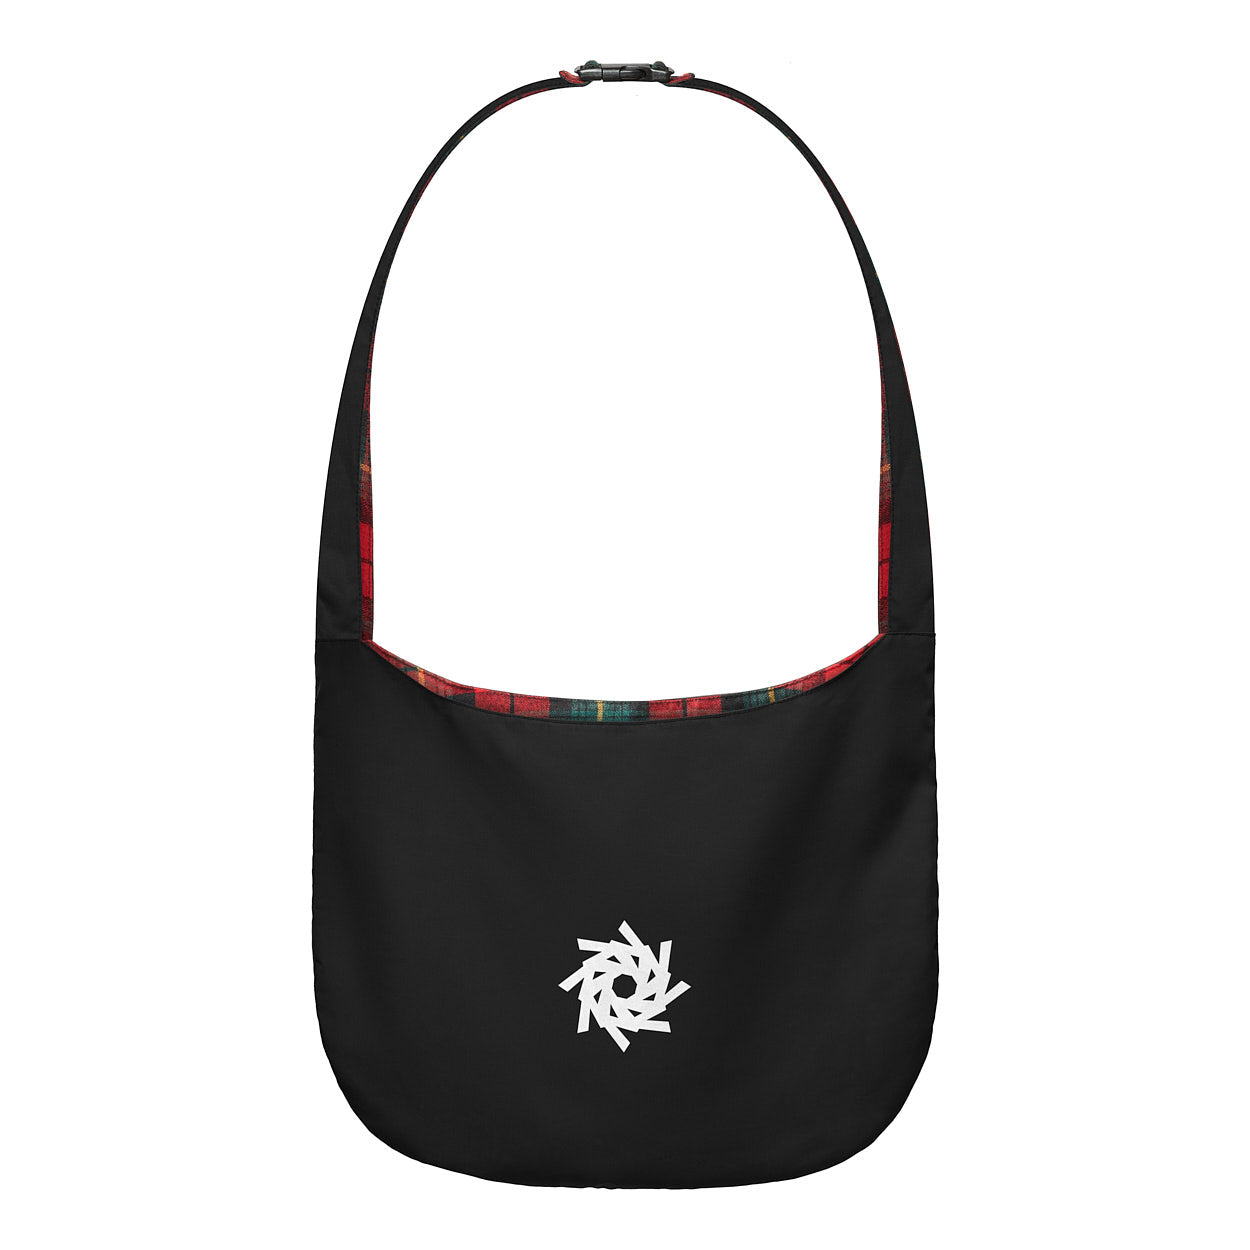 Reversible Black Tsuno Bag